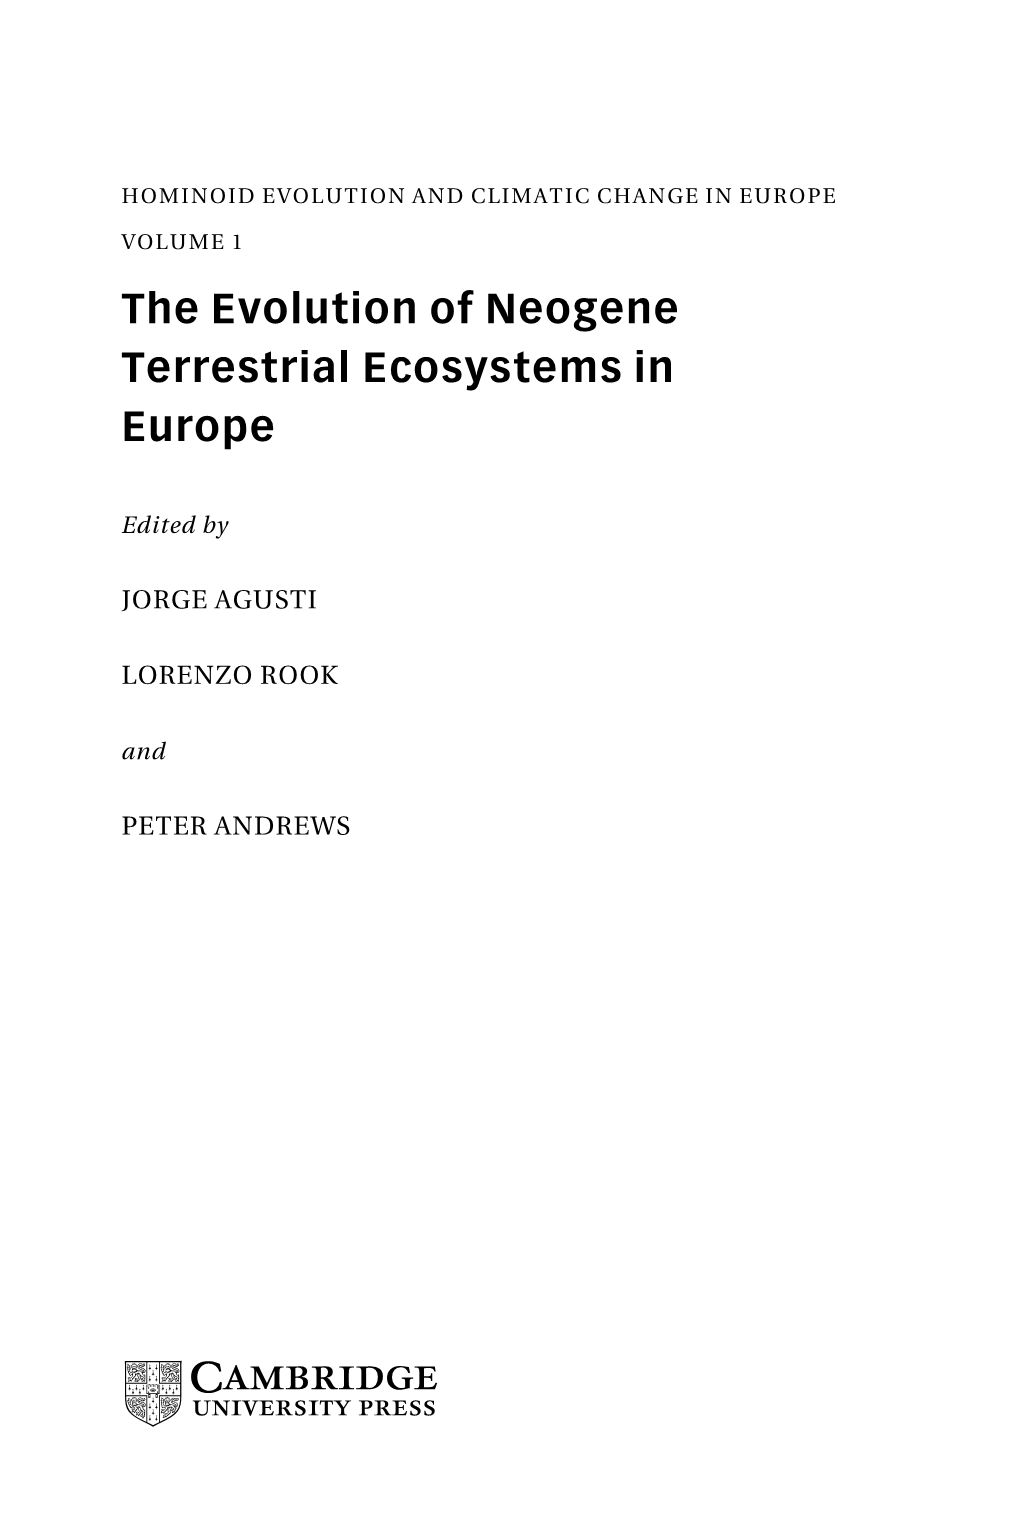 The Evolution of Neogene Terrestrial Ecosystems in Europe